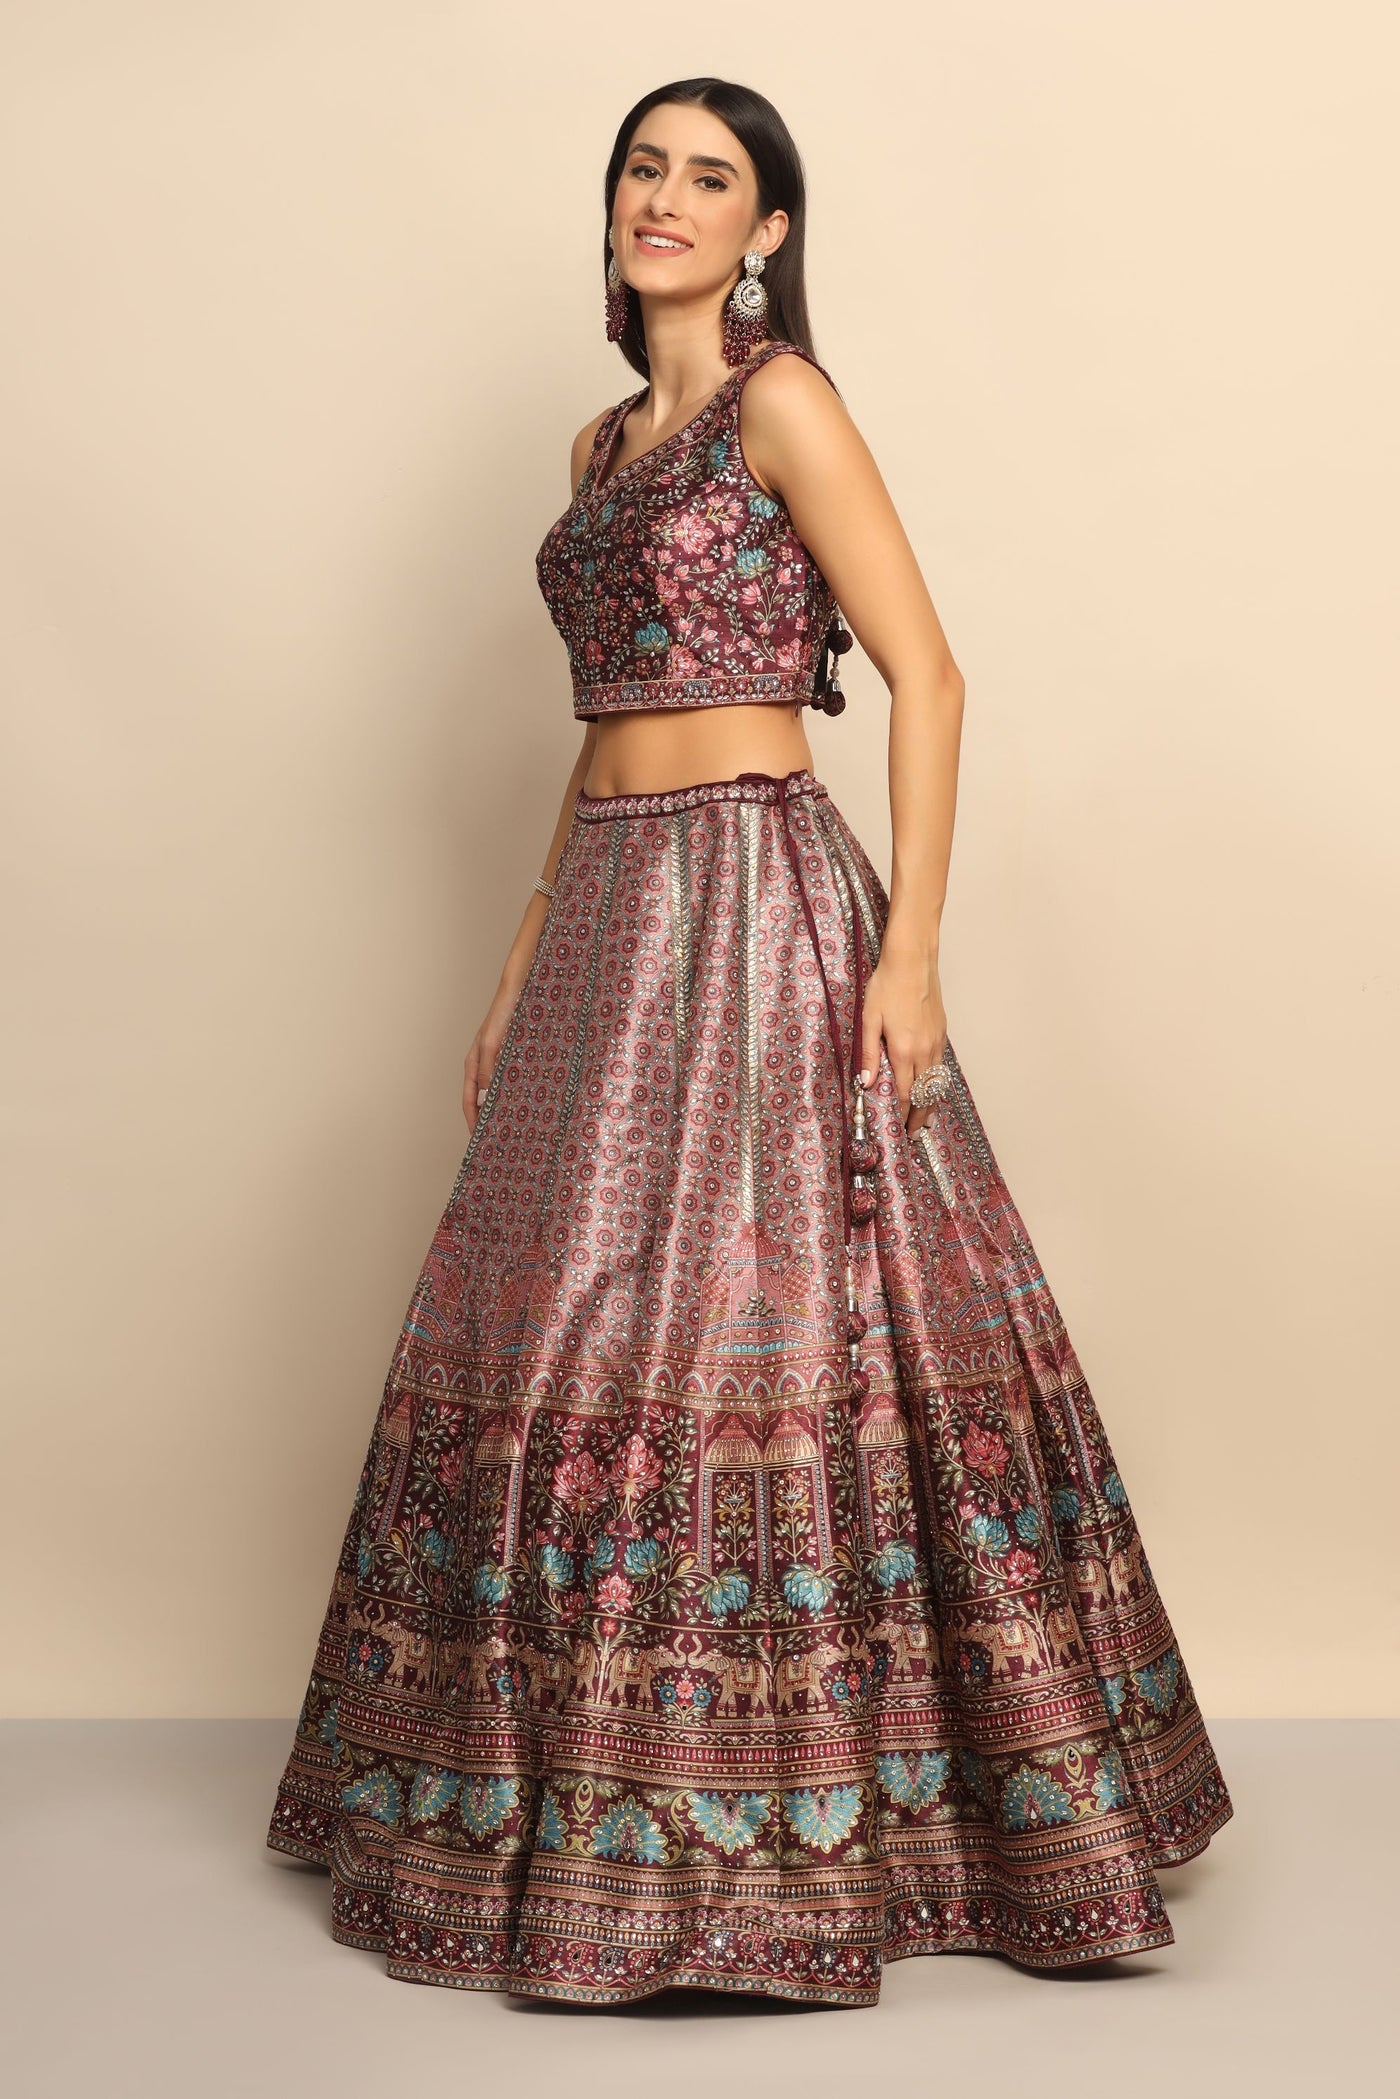 Glamorous Maroon Printed Lehenga with Swarovski Embellishments - Redefine Elegance